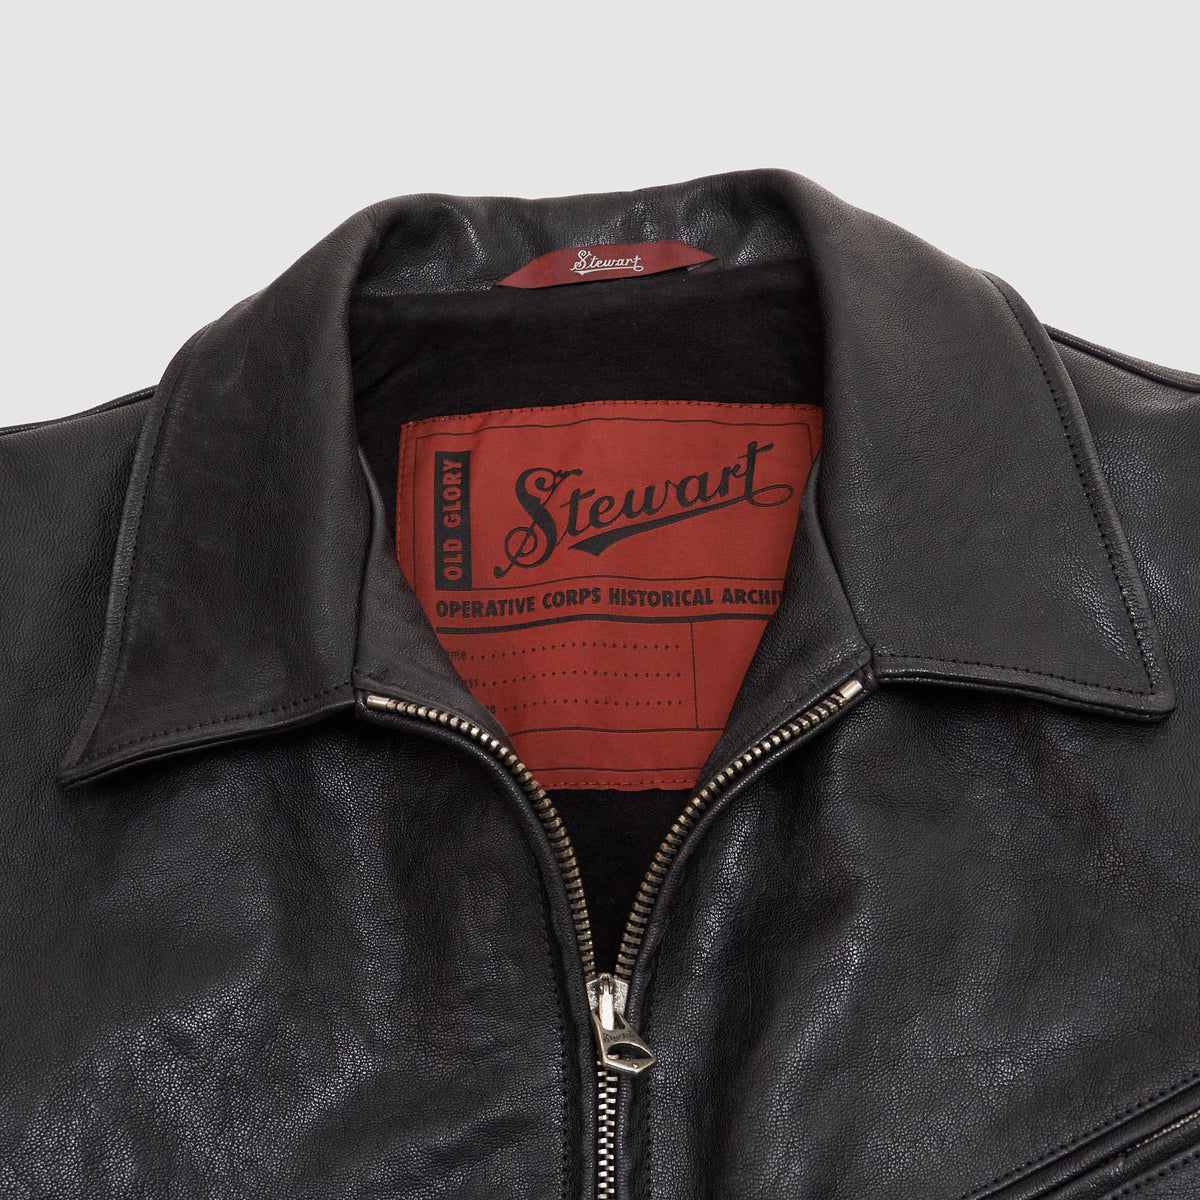 Stewart Motor Car Leather Jacket